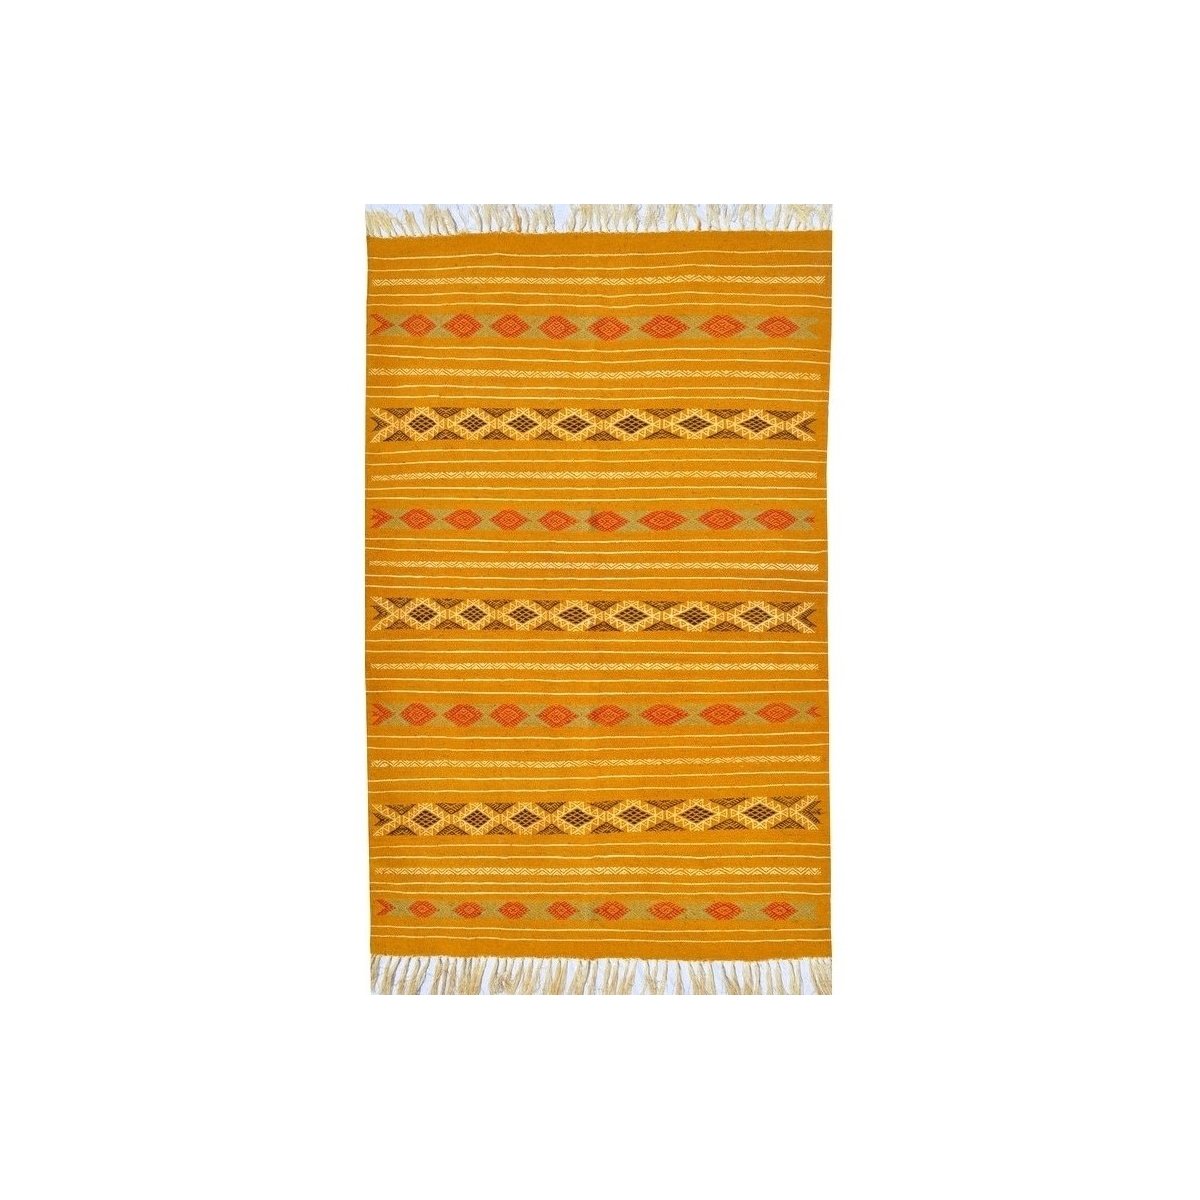 Tapete berbere Tapete Kilim Fahs 100x150 Branco/Amarelado (Tecidos à mão, Lã) Tapete tunisiano kilim, estilo marroquino. Tapete 